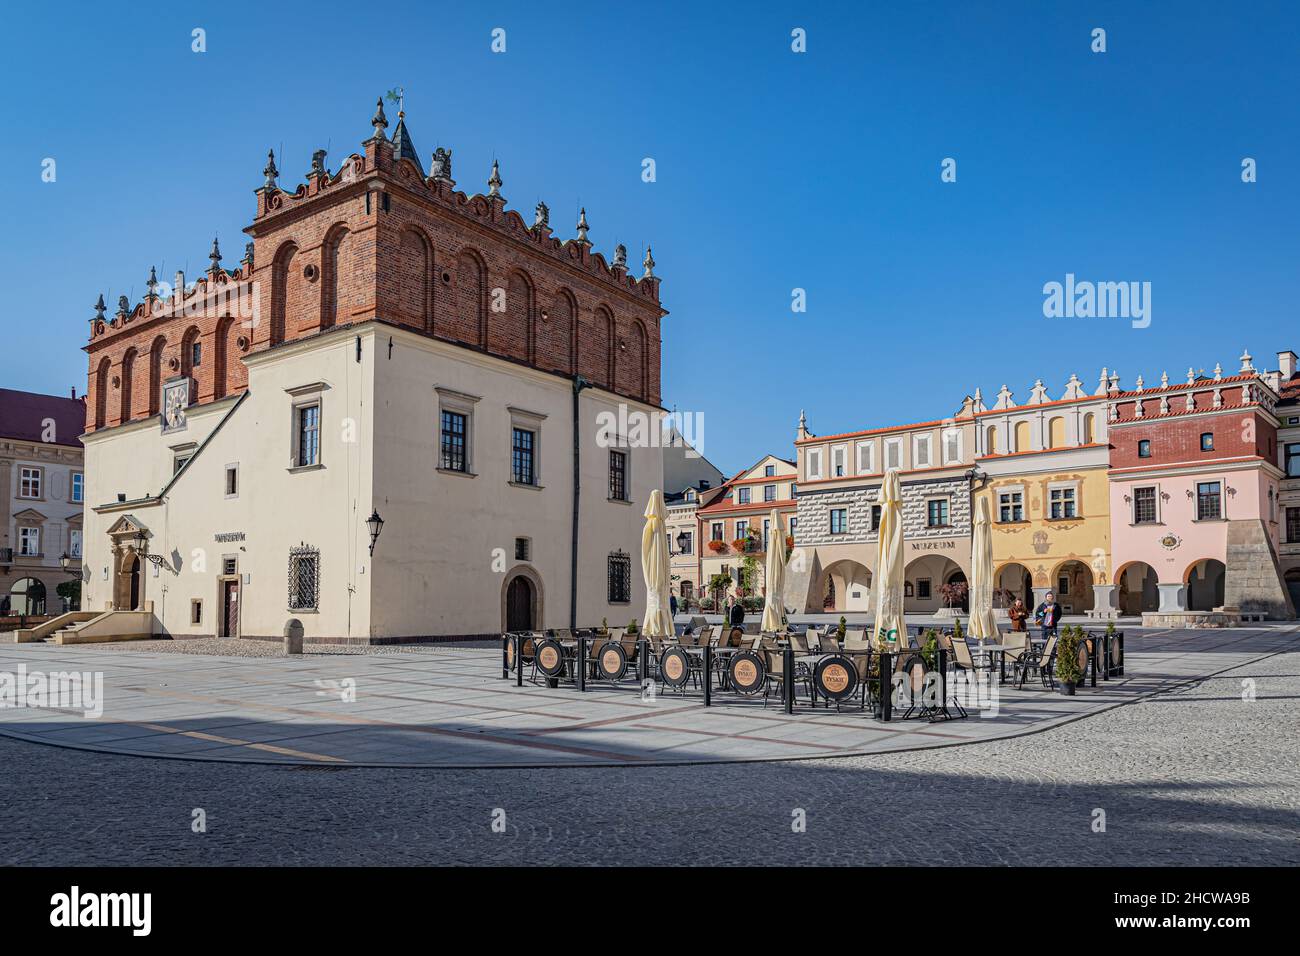 TARNOW, POLAND - OCTOBER 09, 2021: Polish city in Malopolska often called 'Pearl of Polish Renaissance'. Europe's most beautiful town according CNN. o Stock Photo